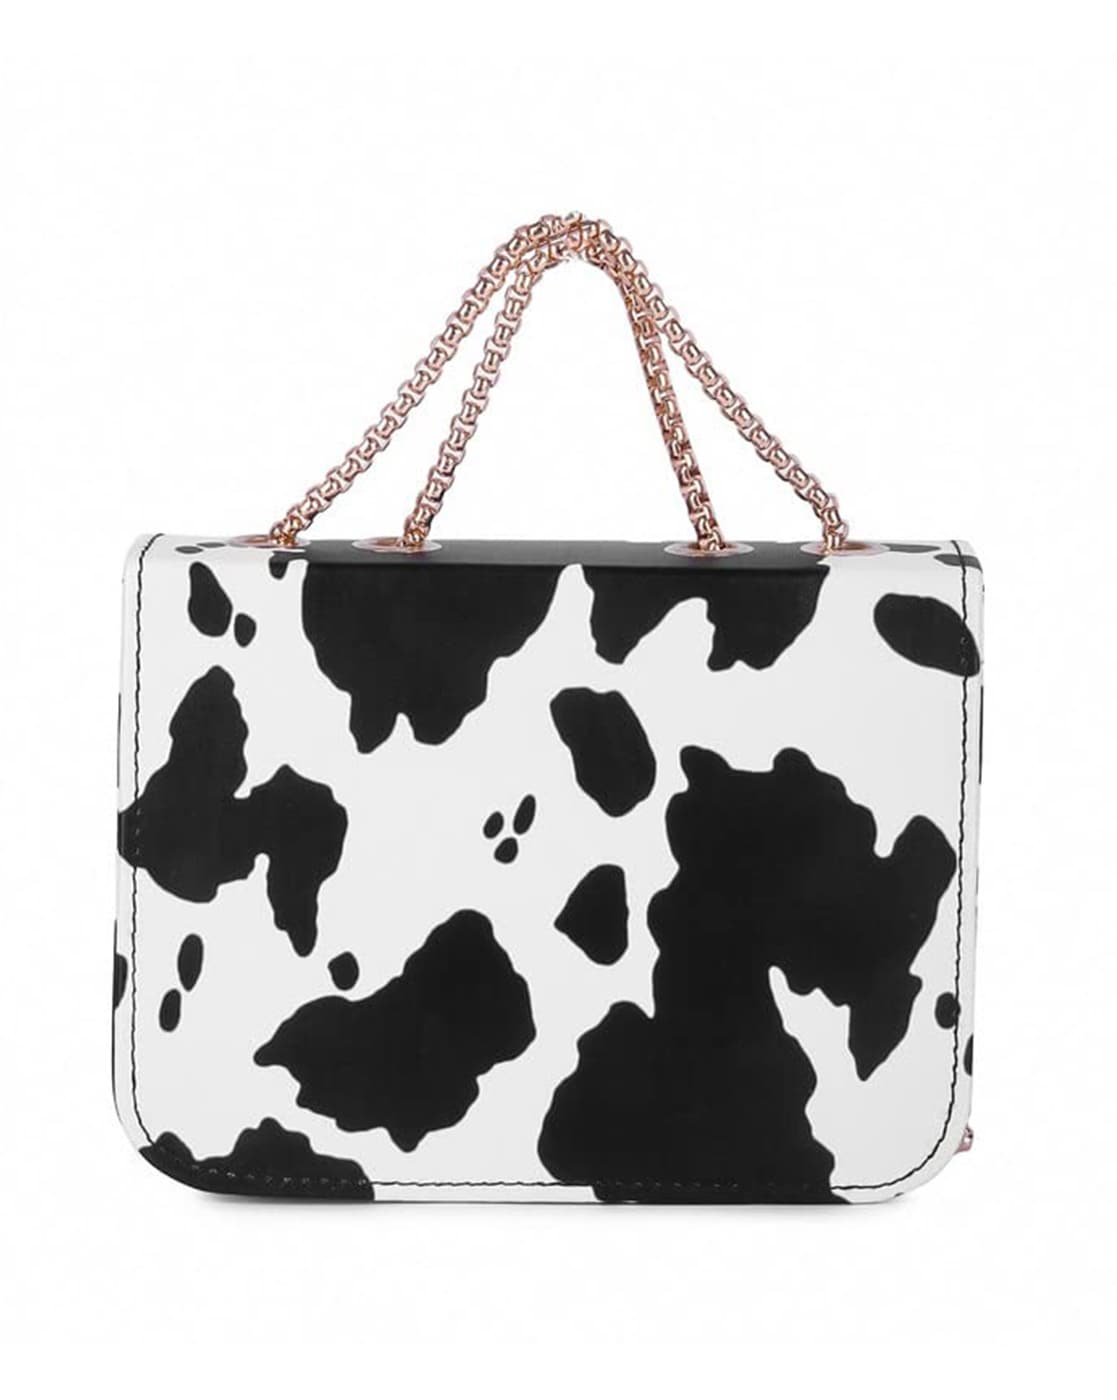 Buy Online: Cow Print Crossbody Sling Bag, Vdesi India